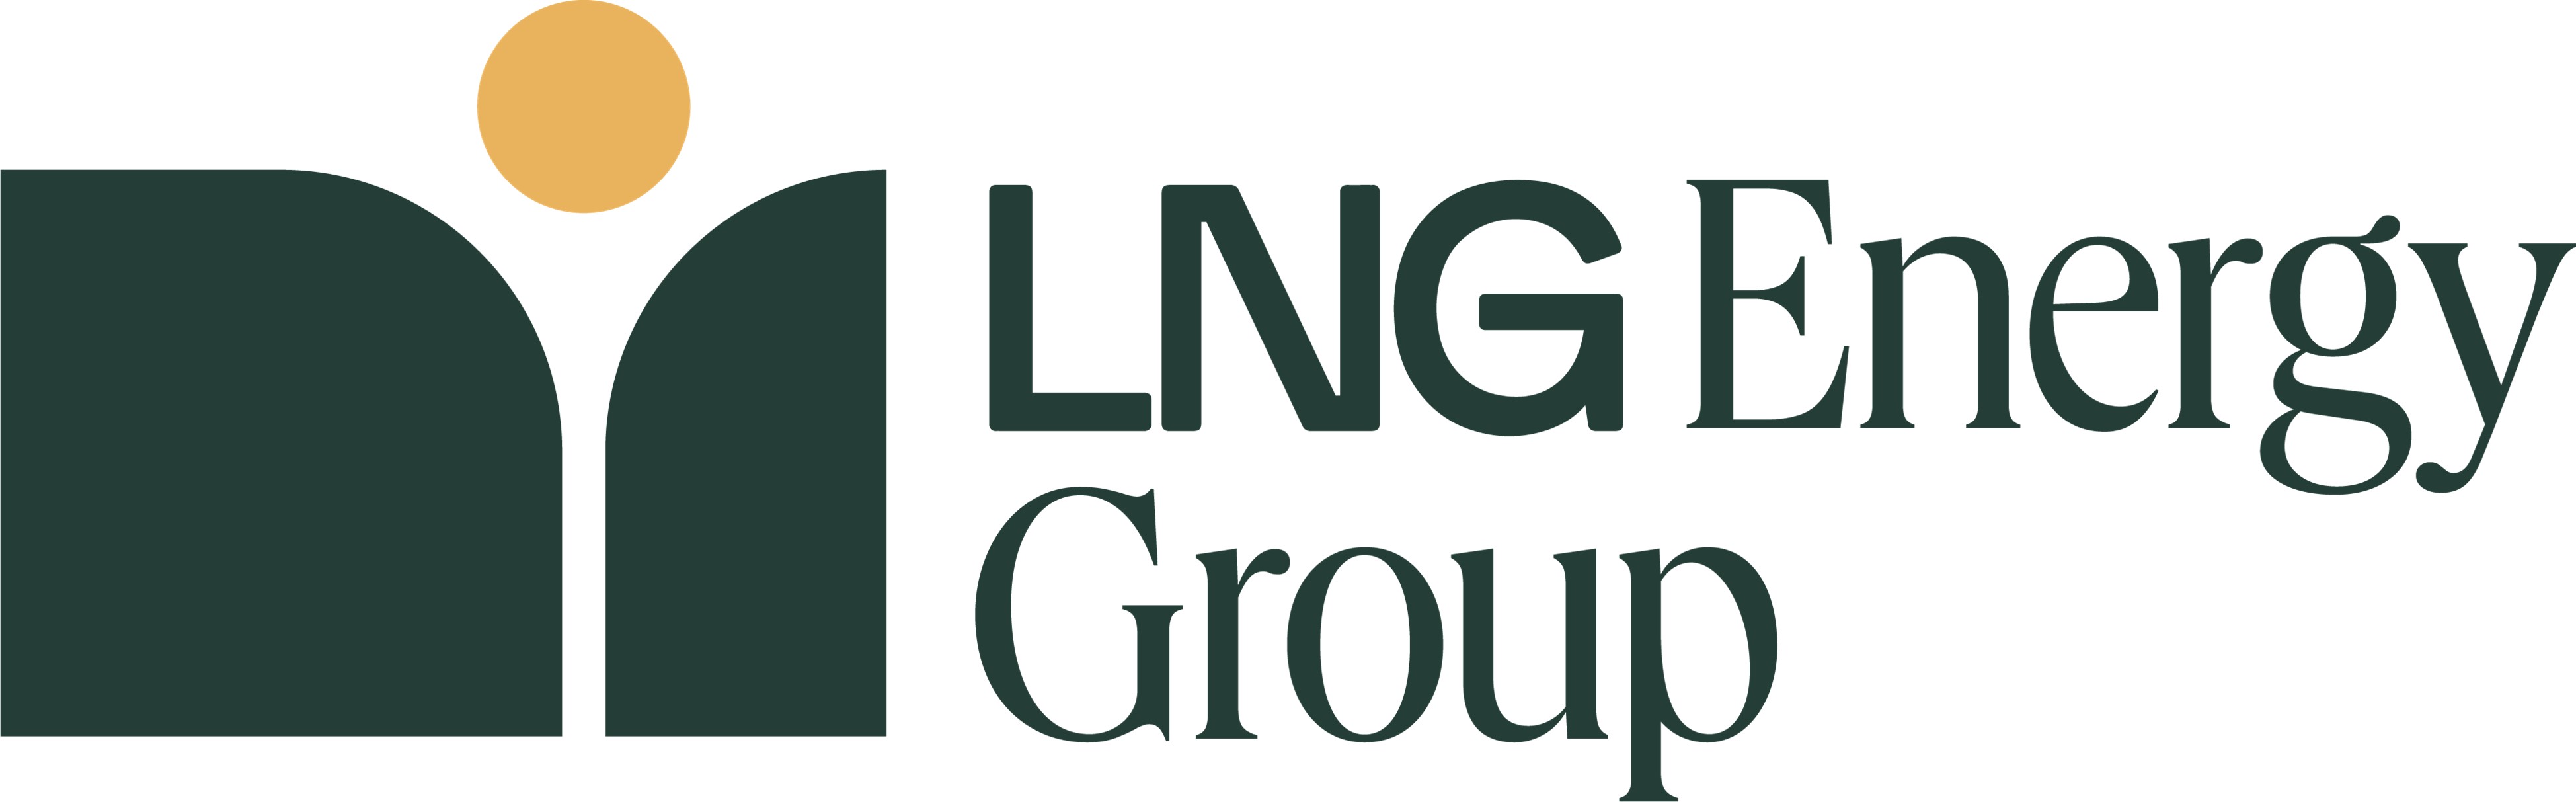 LNG Energy Group logo.jpg